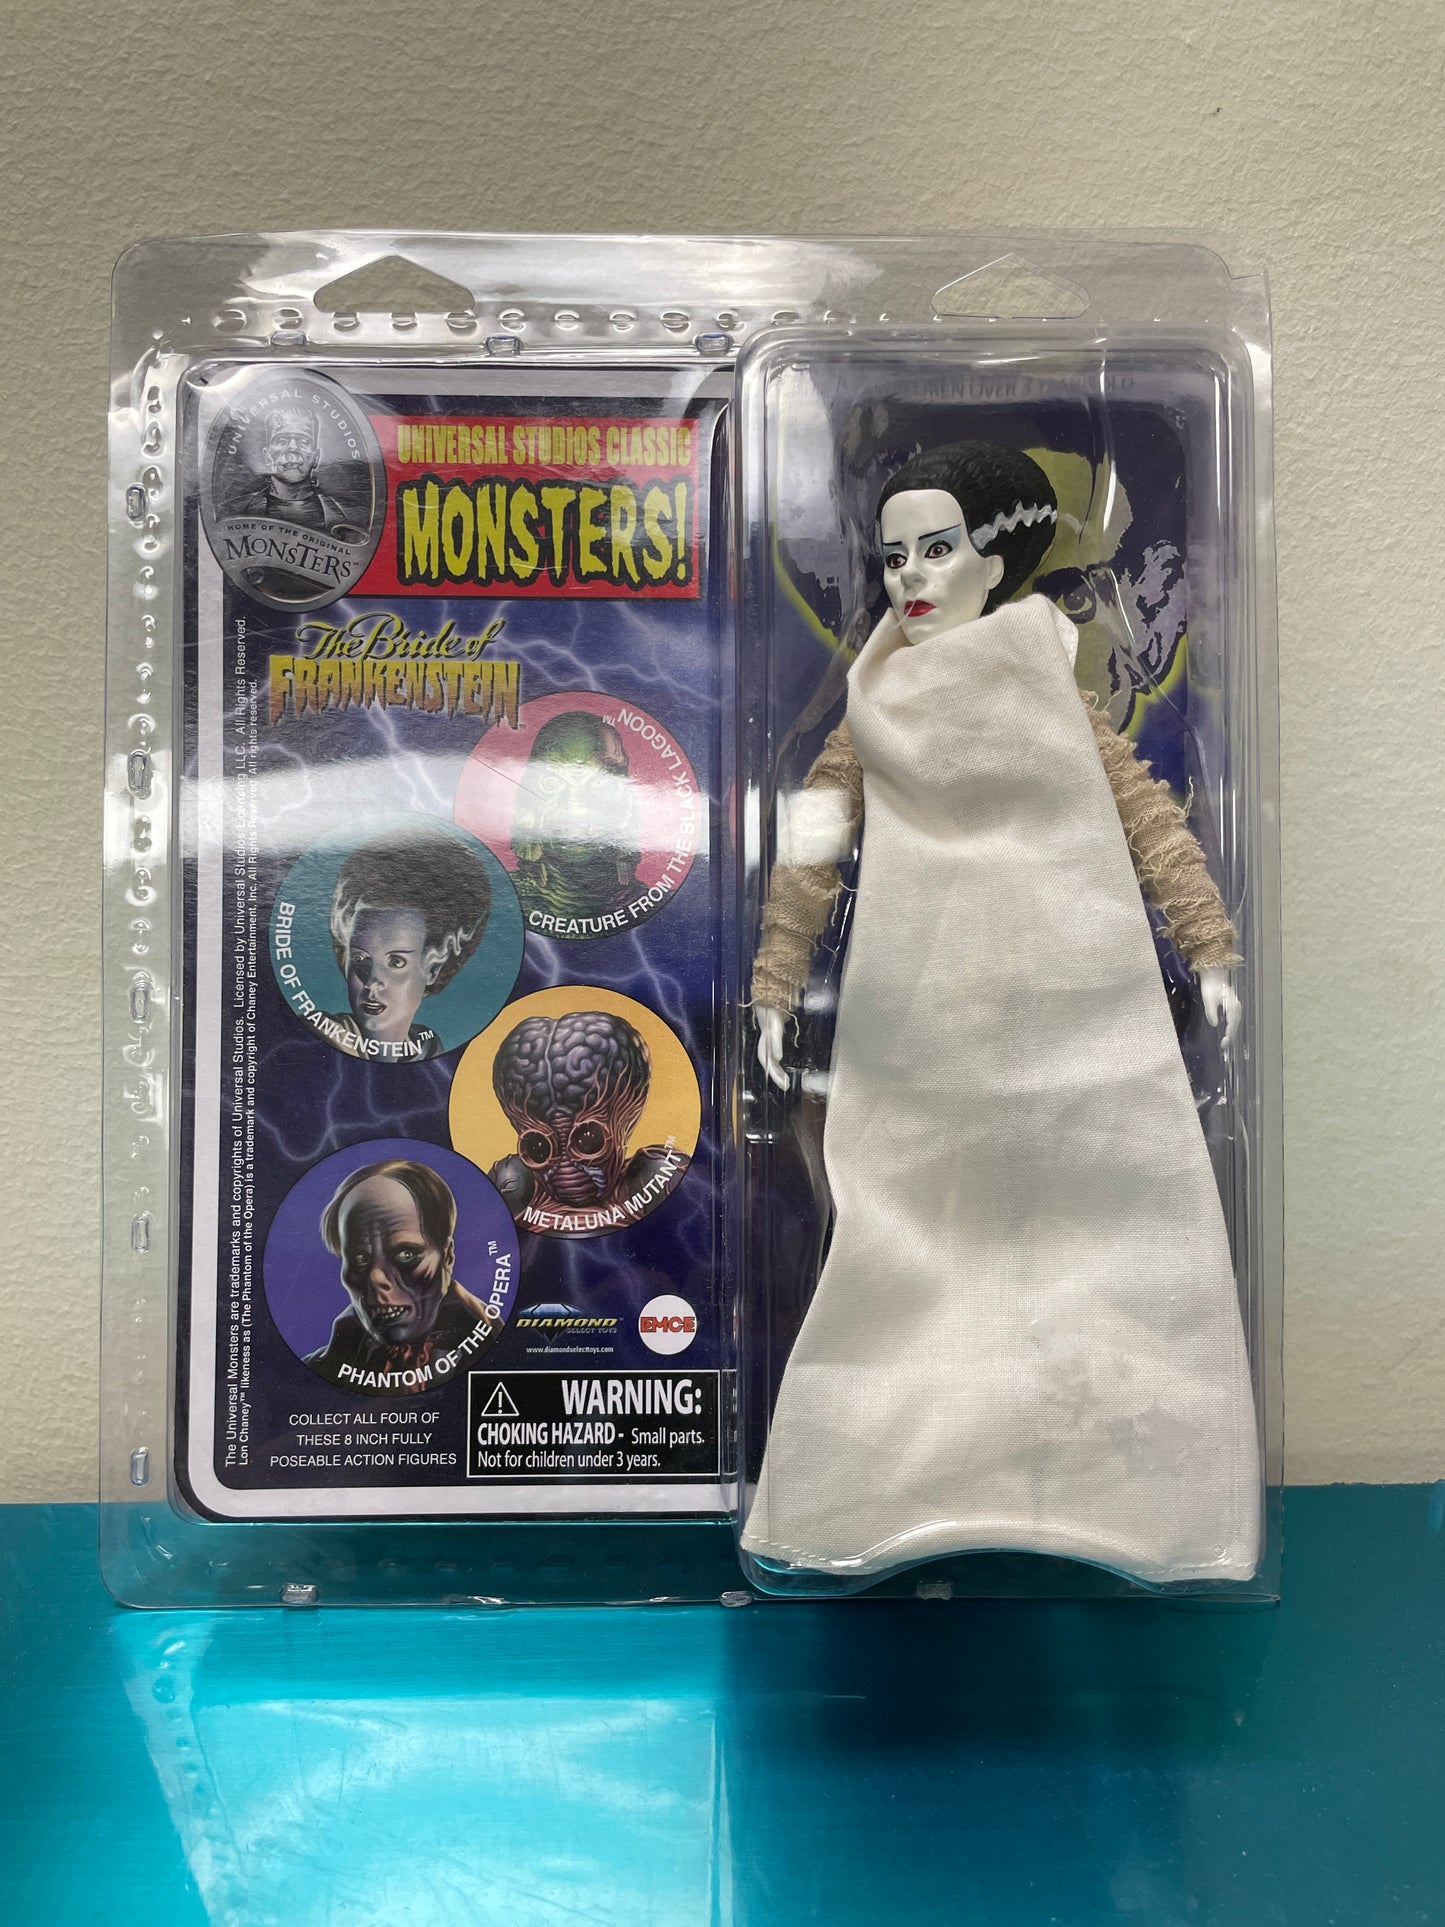 Diamond Select Universal Studios Classic Monsters! The Bride of Frankenstein